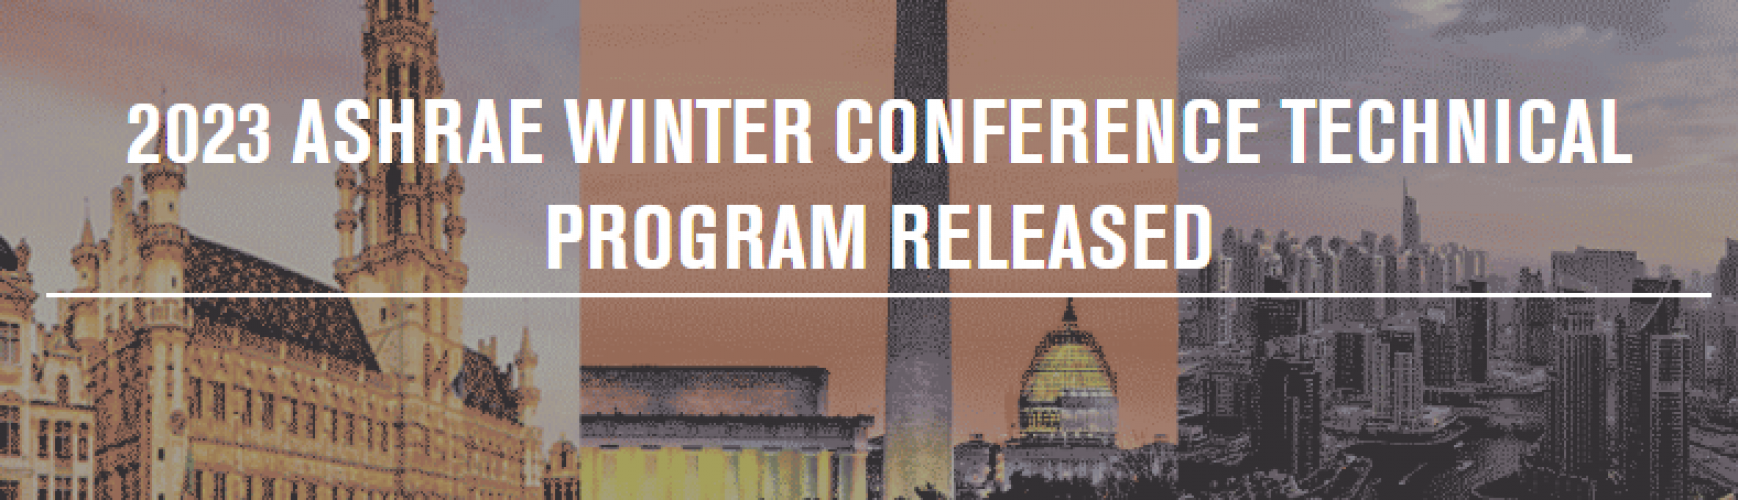 2023 ASHRAE Winter Conference Technical Program Released